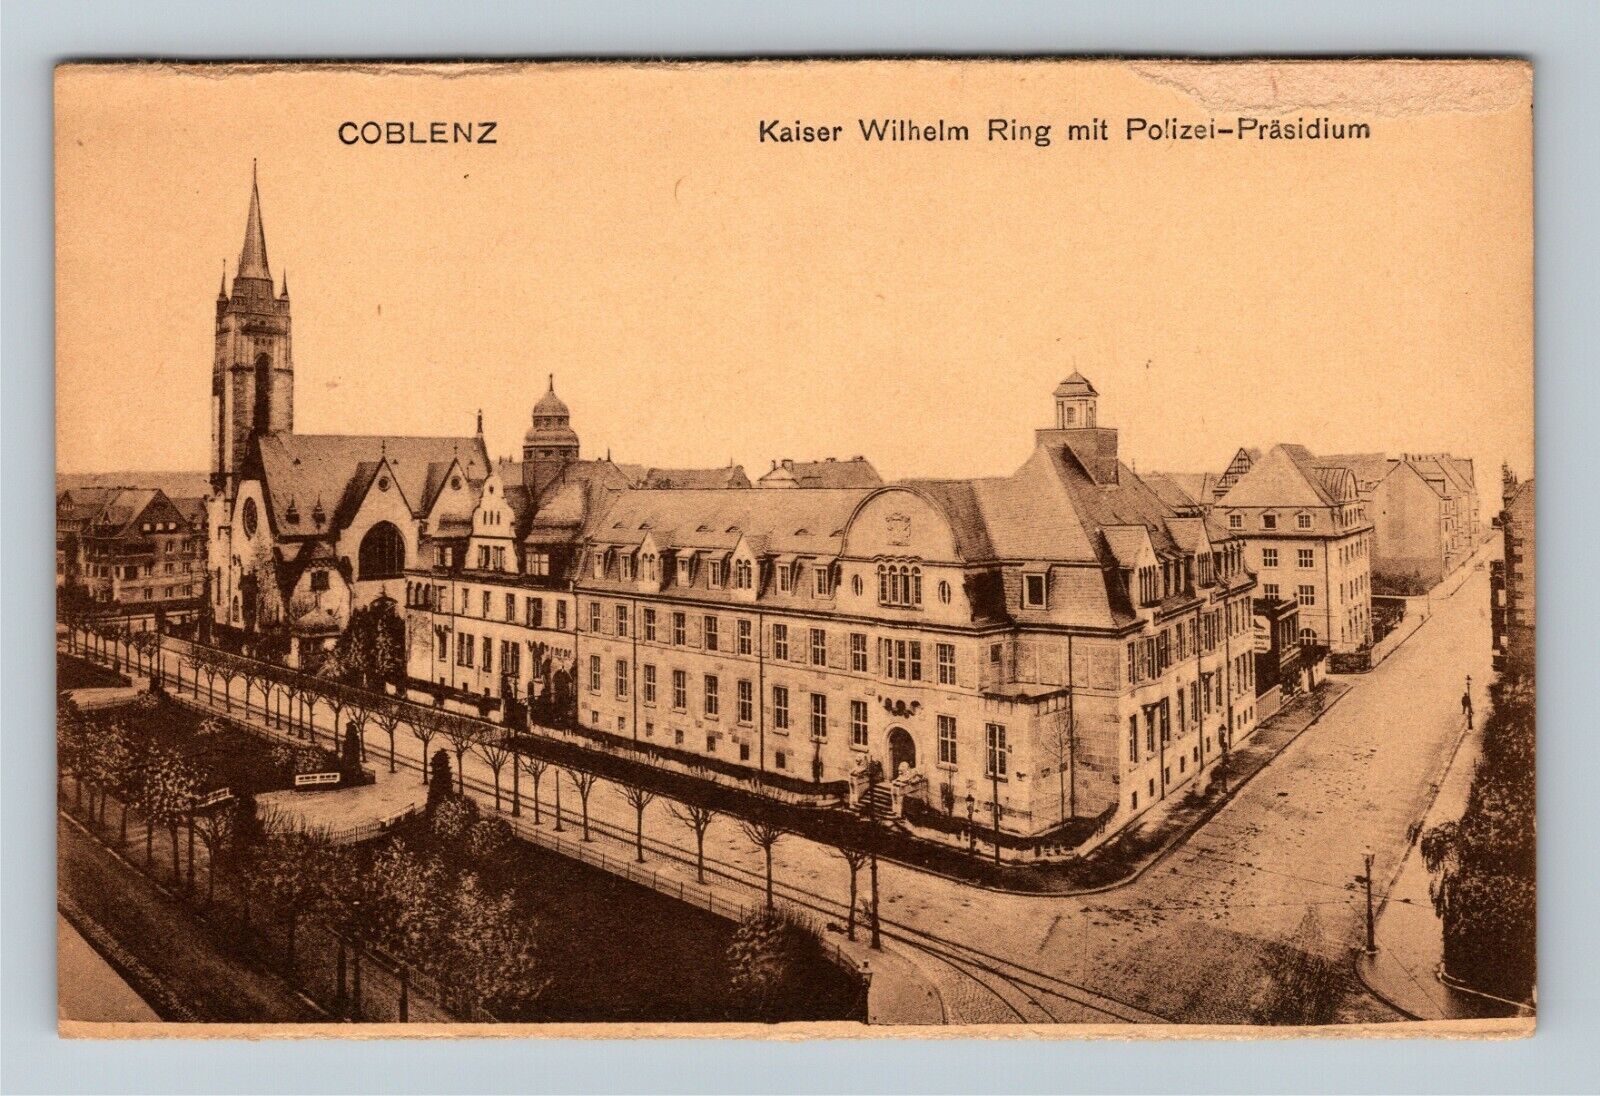 Coblenz Germany, Kaiser Wilhelm Ring mit Polizei Prasidium, Vintage Postcard